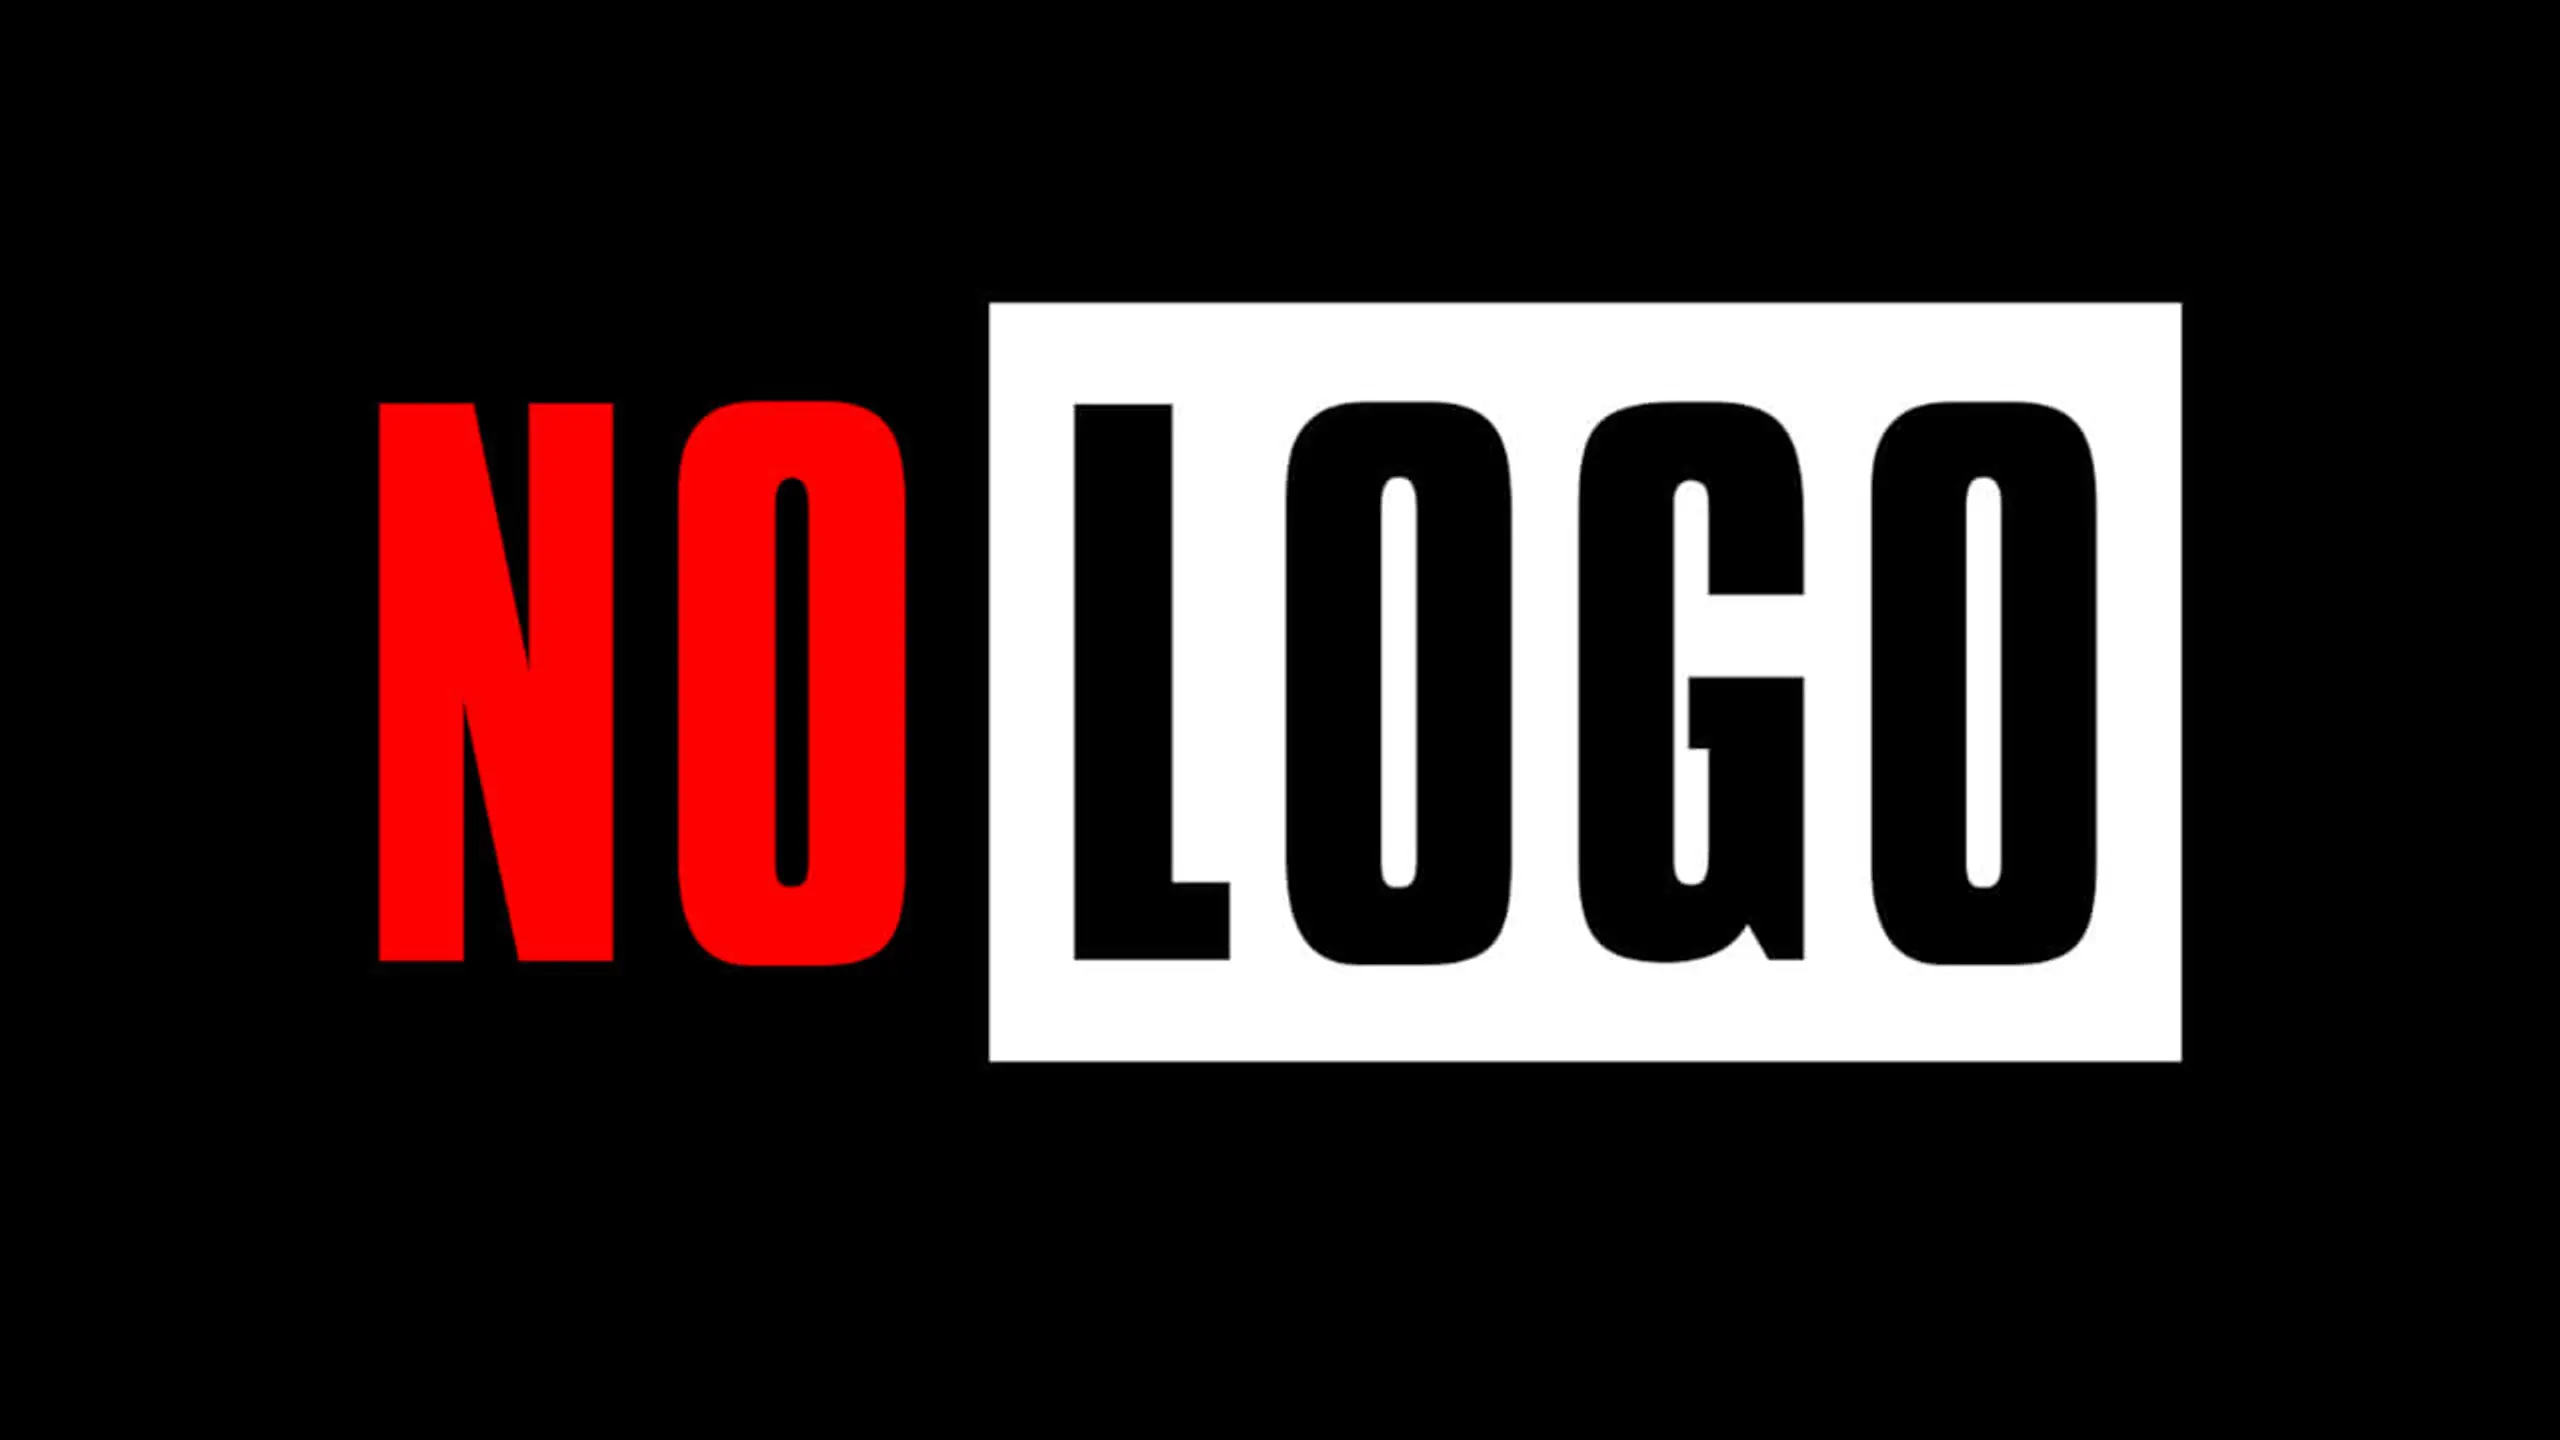 No Logo: Taking Aim at the Brand Bullies